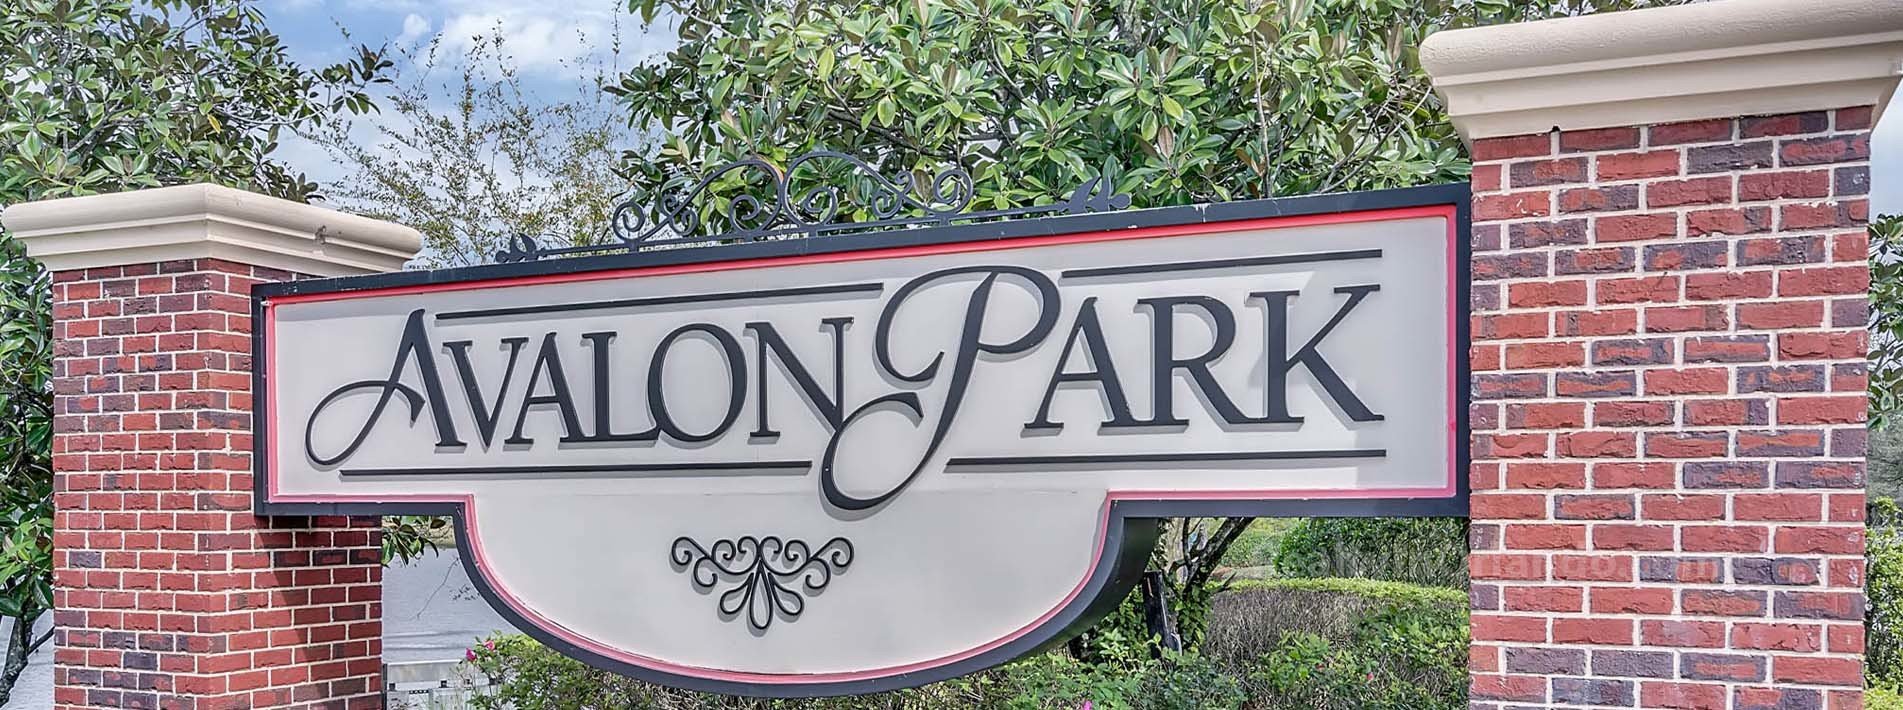 Avalon Park East Orlando Real Estate